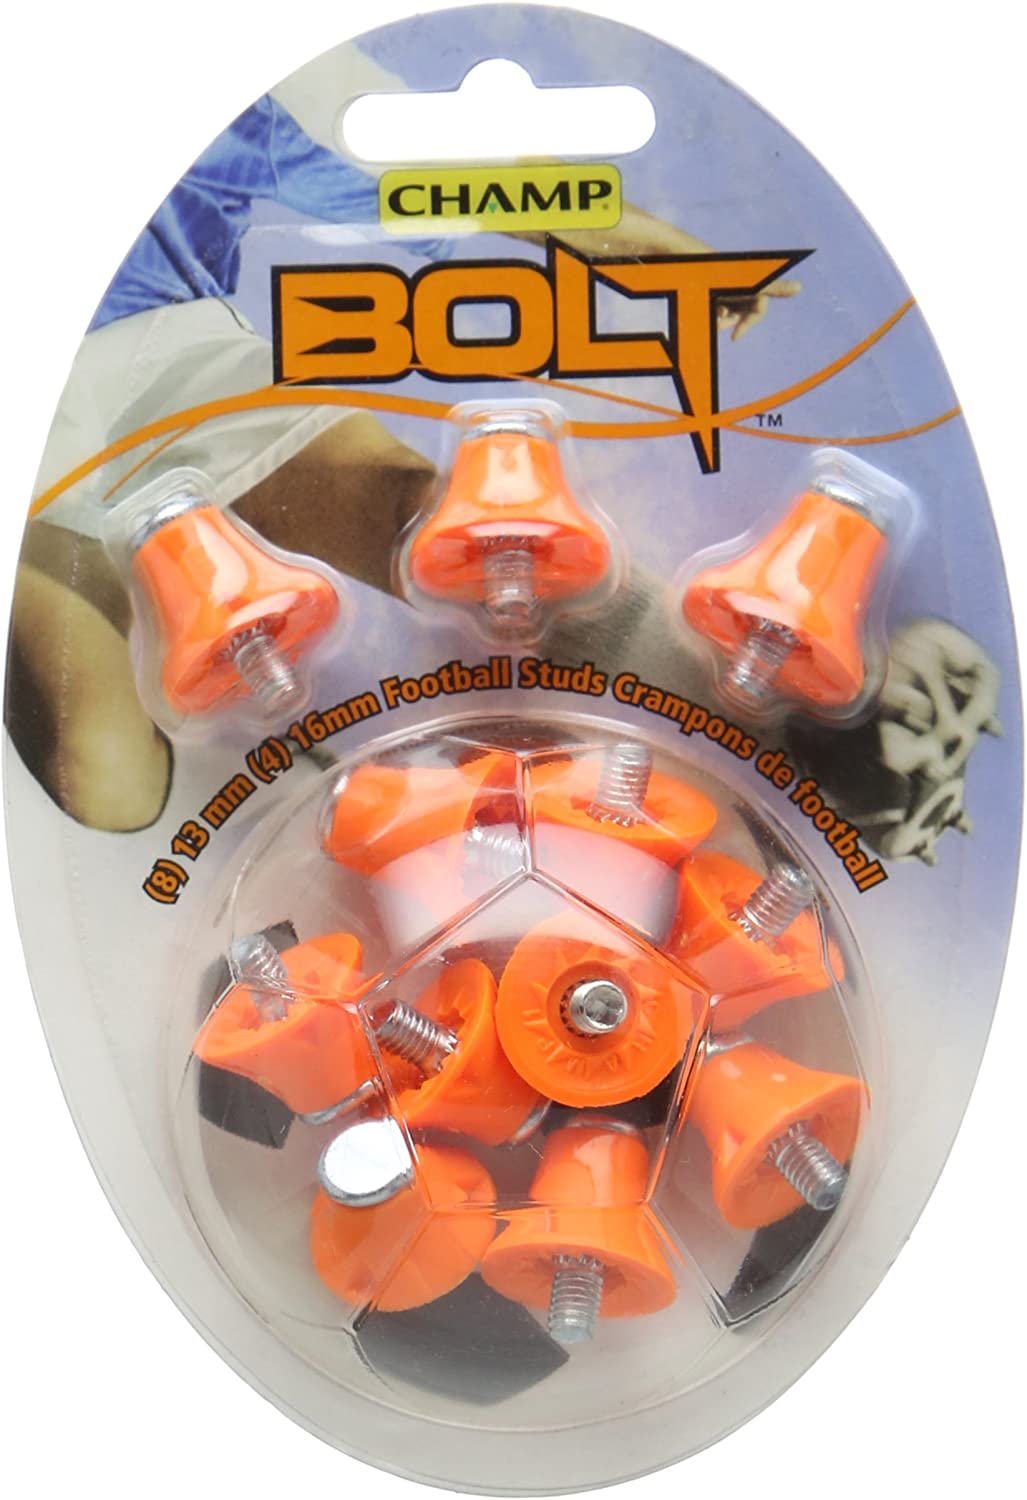 Champ Bolt Football Studs, Orange Steel Tip.